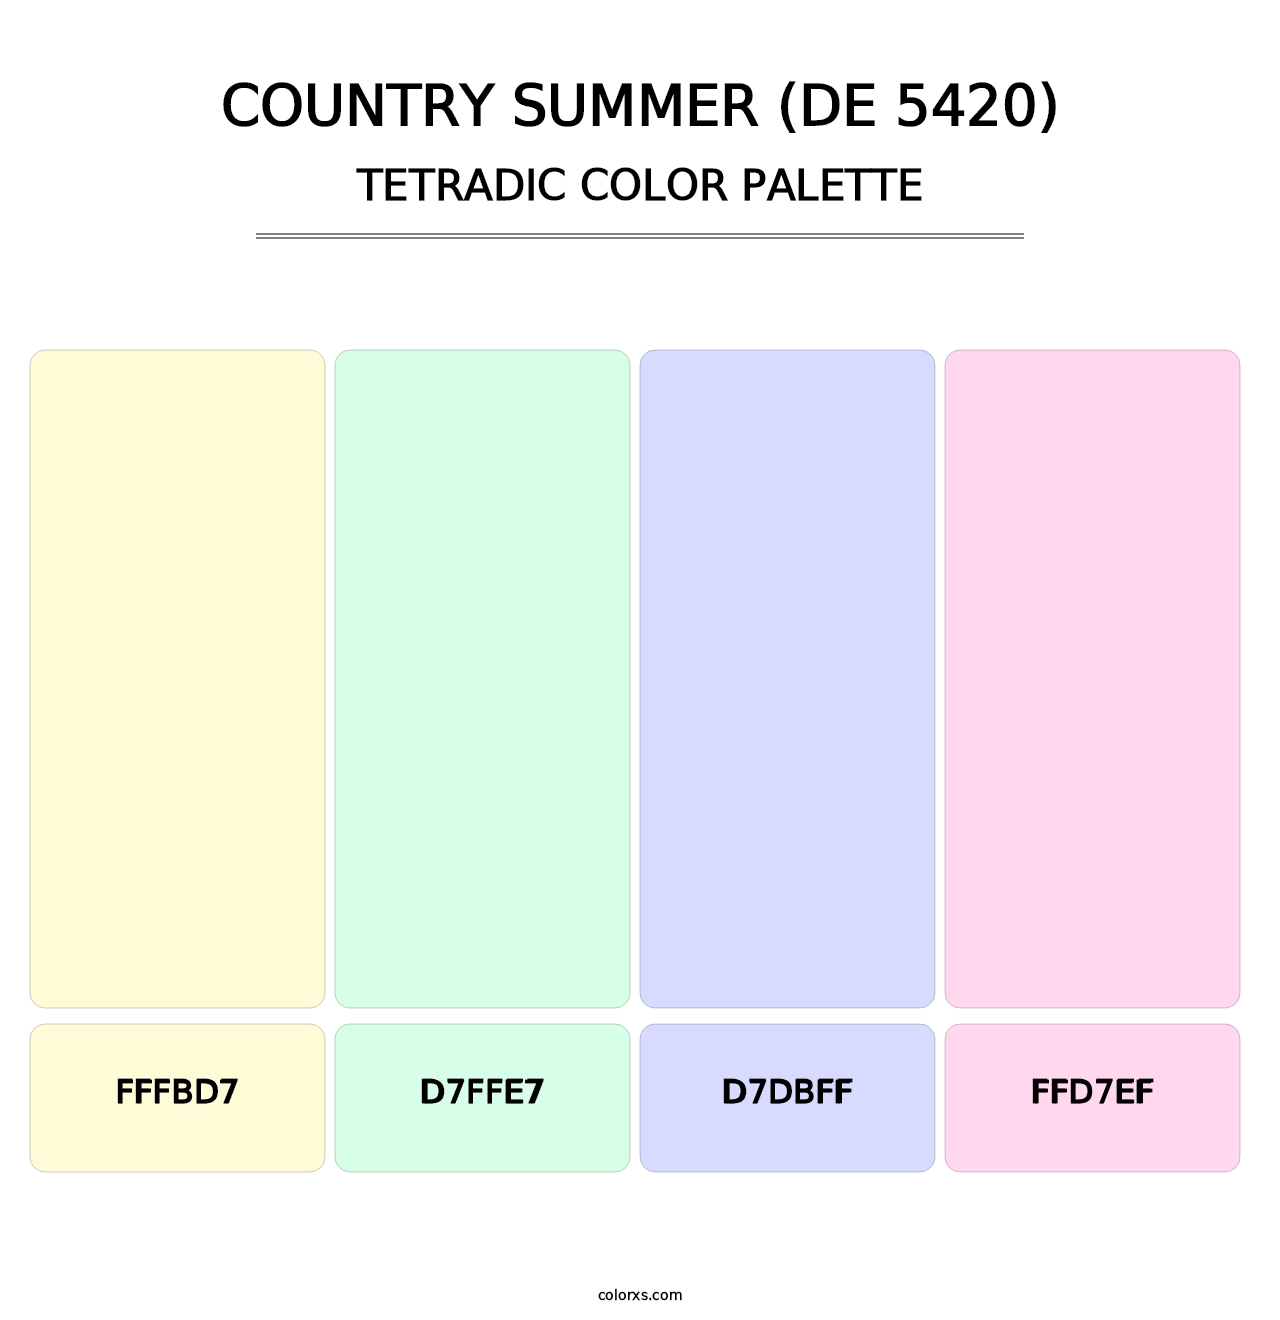 Country Summer (DE 5420) - Tetradic Color Palette